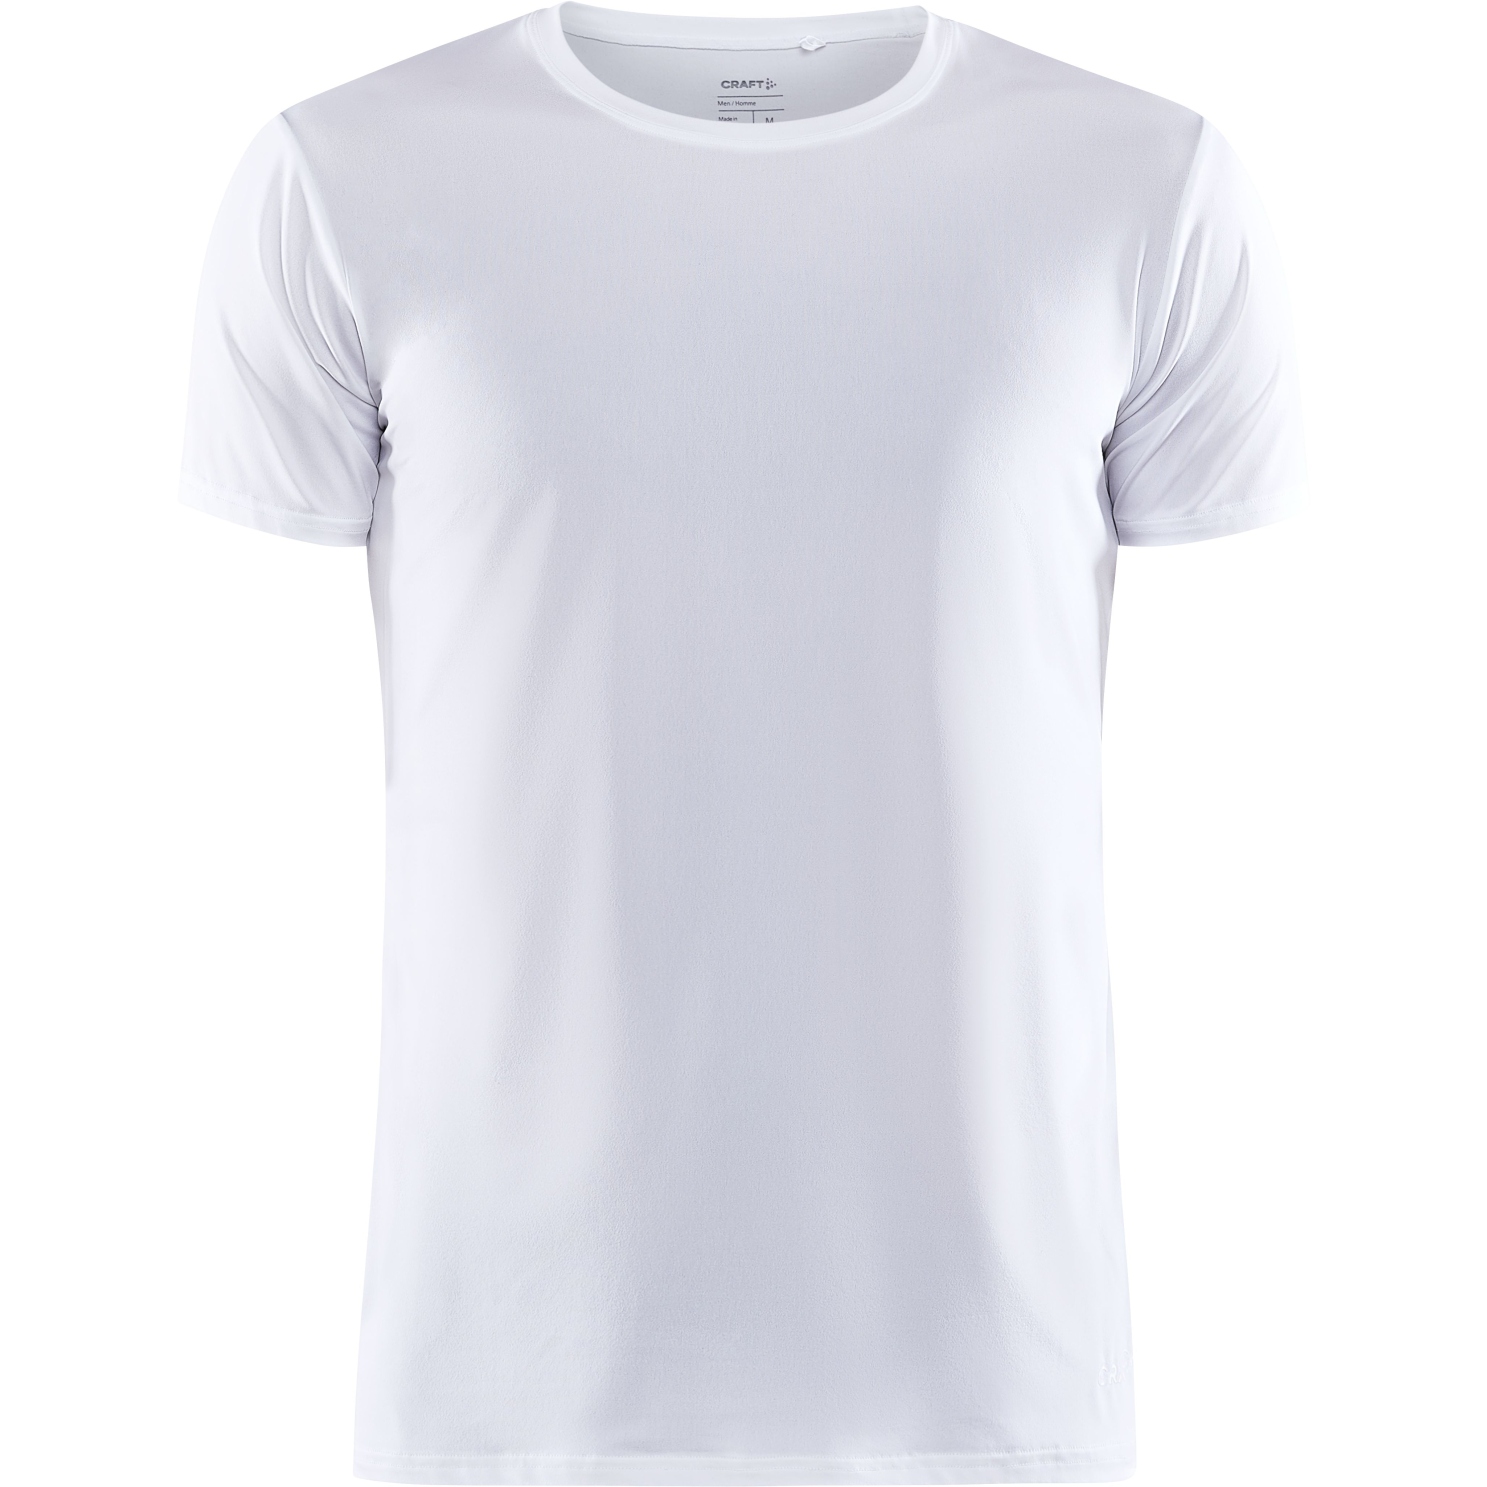 Foto de CRAFT Core Dry Camiseta Hombre - White